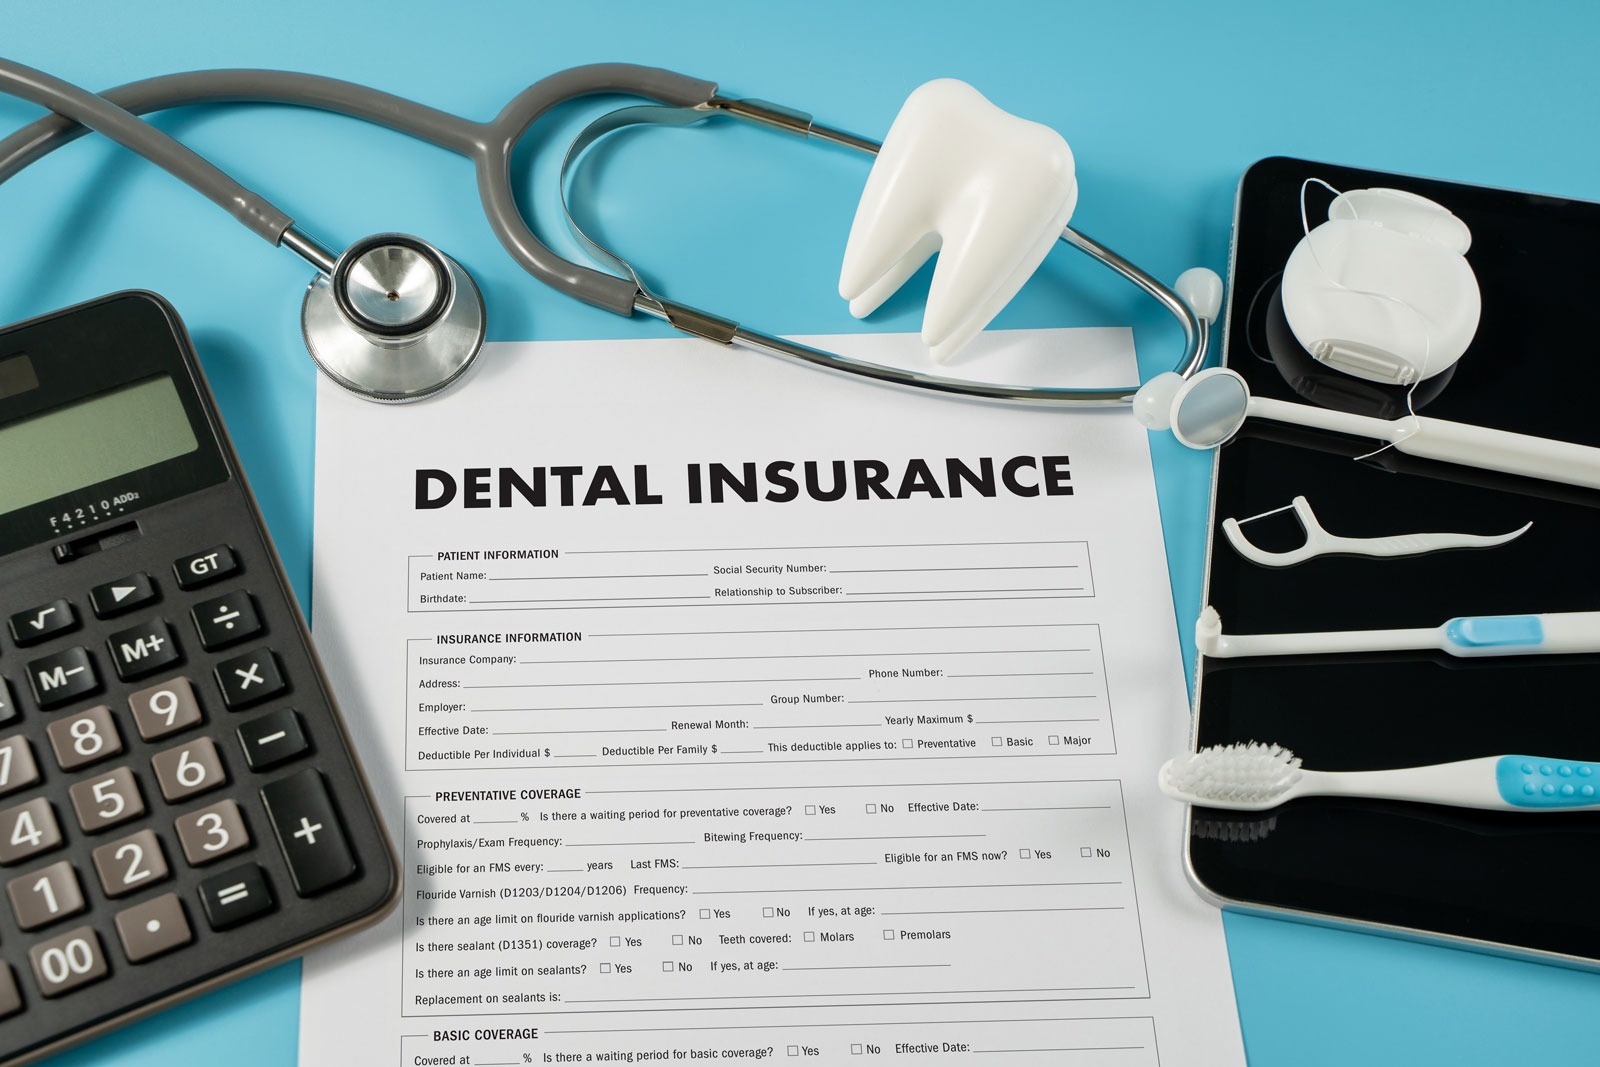 Health, Life, & Dental Insurance in Lewisville